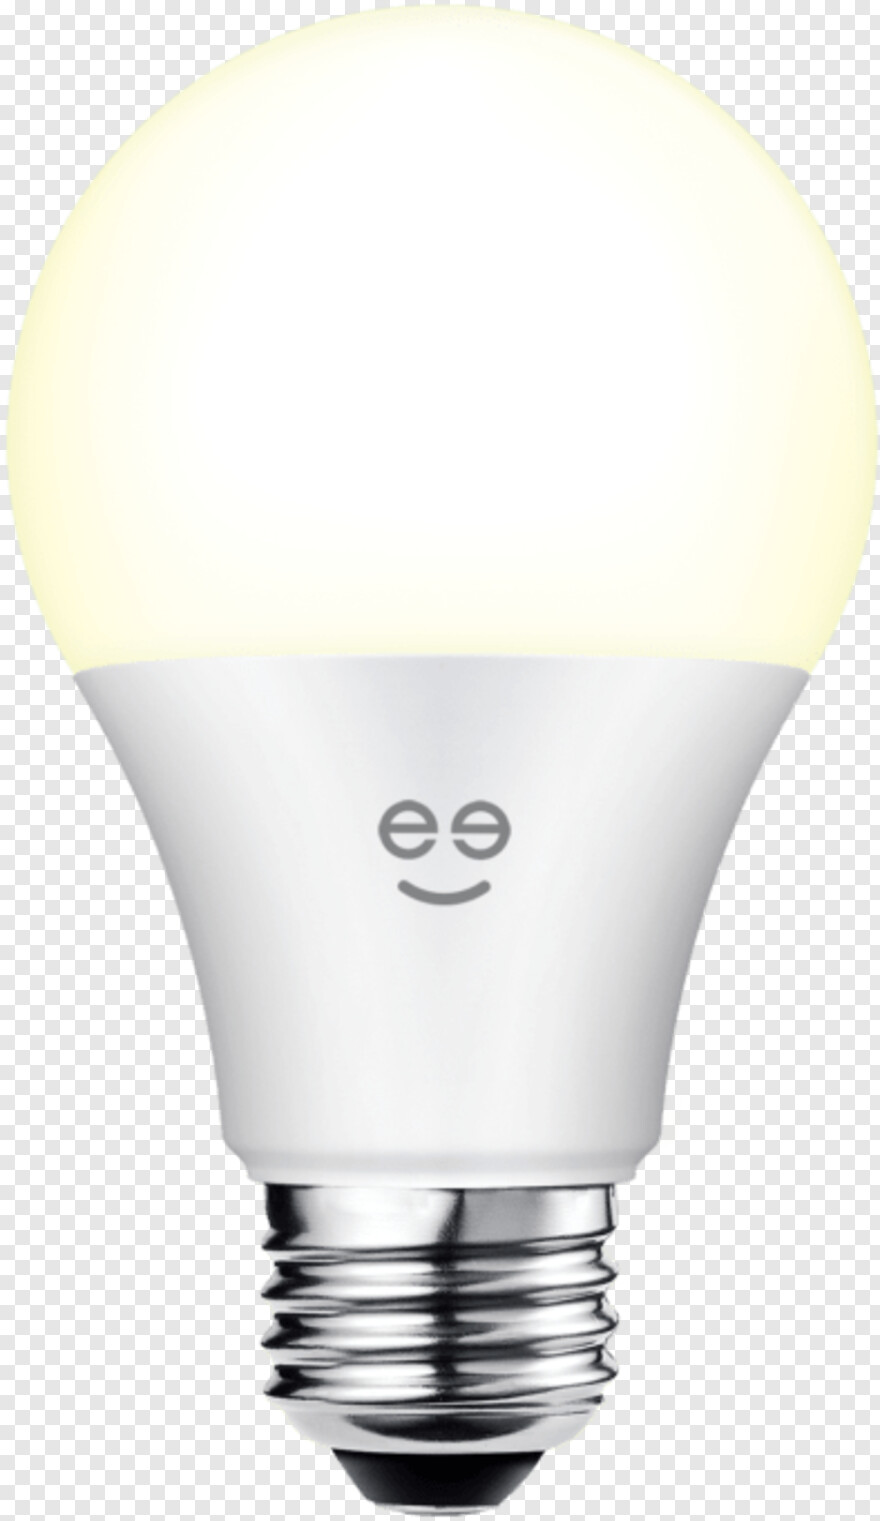  Christmas Bulb, Light Bulb Clip Art, Smart Phone, Smart Mobiles, Light Bulb, Light Bulb Idea